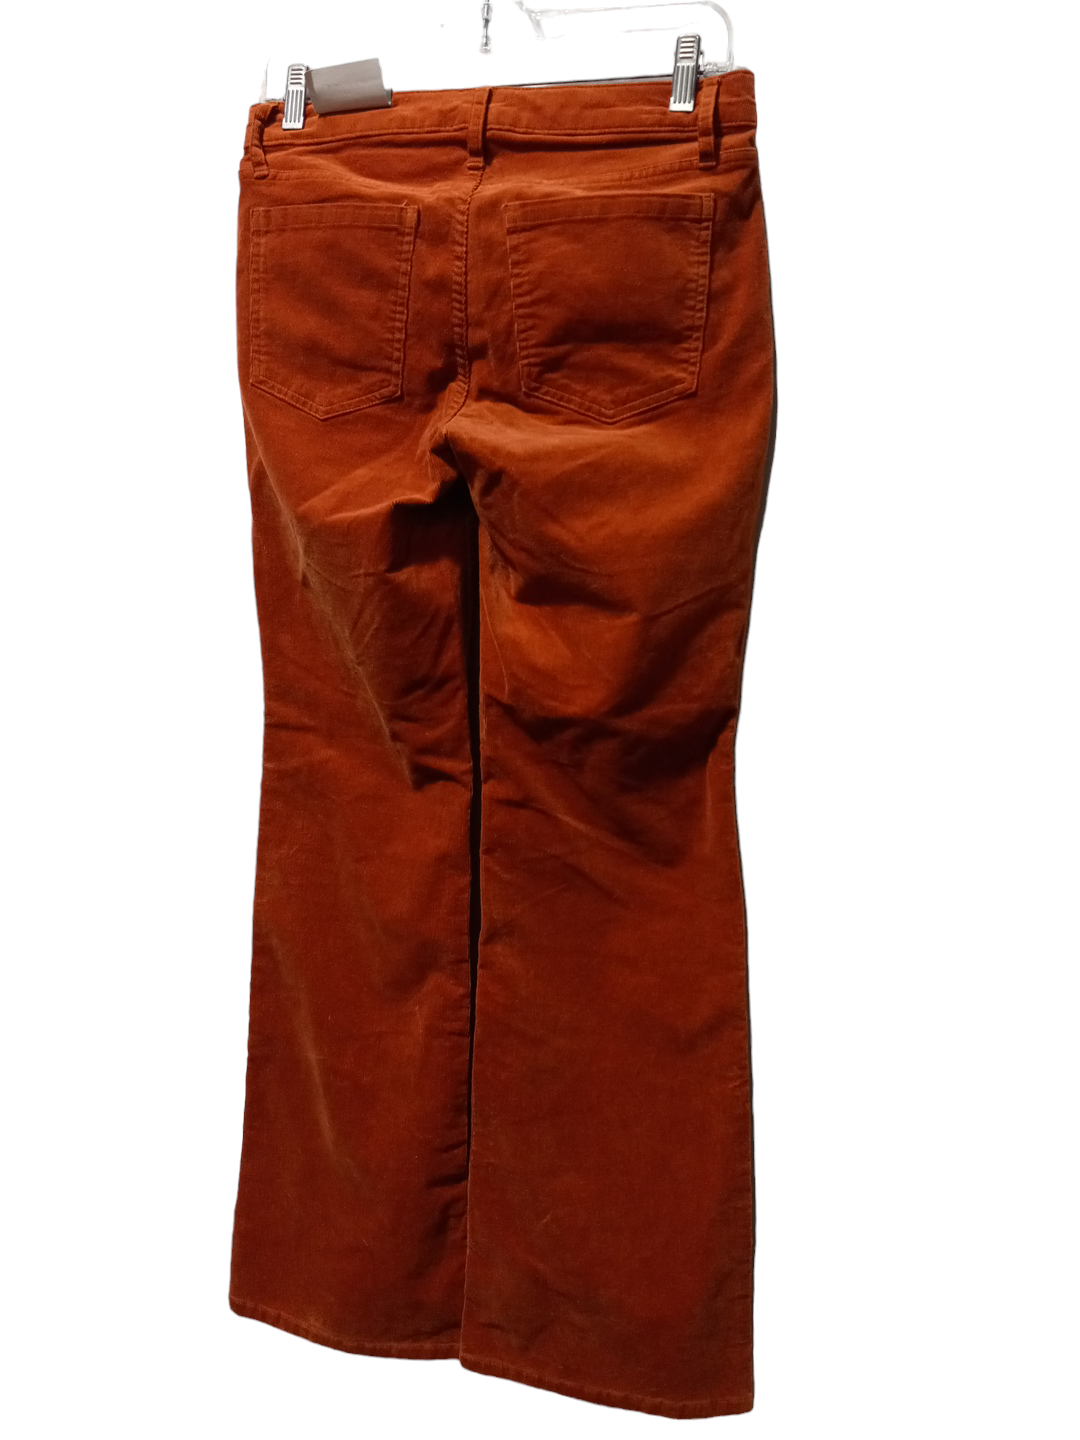 Orange Pants Corduroy Wild Fable, Size 4